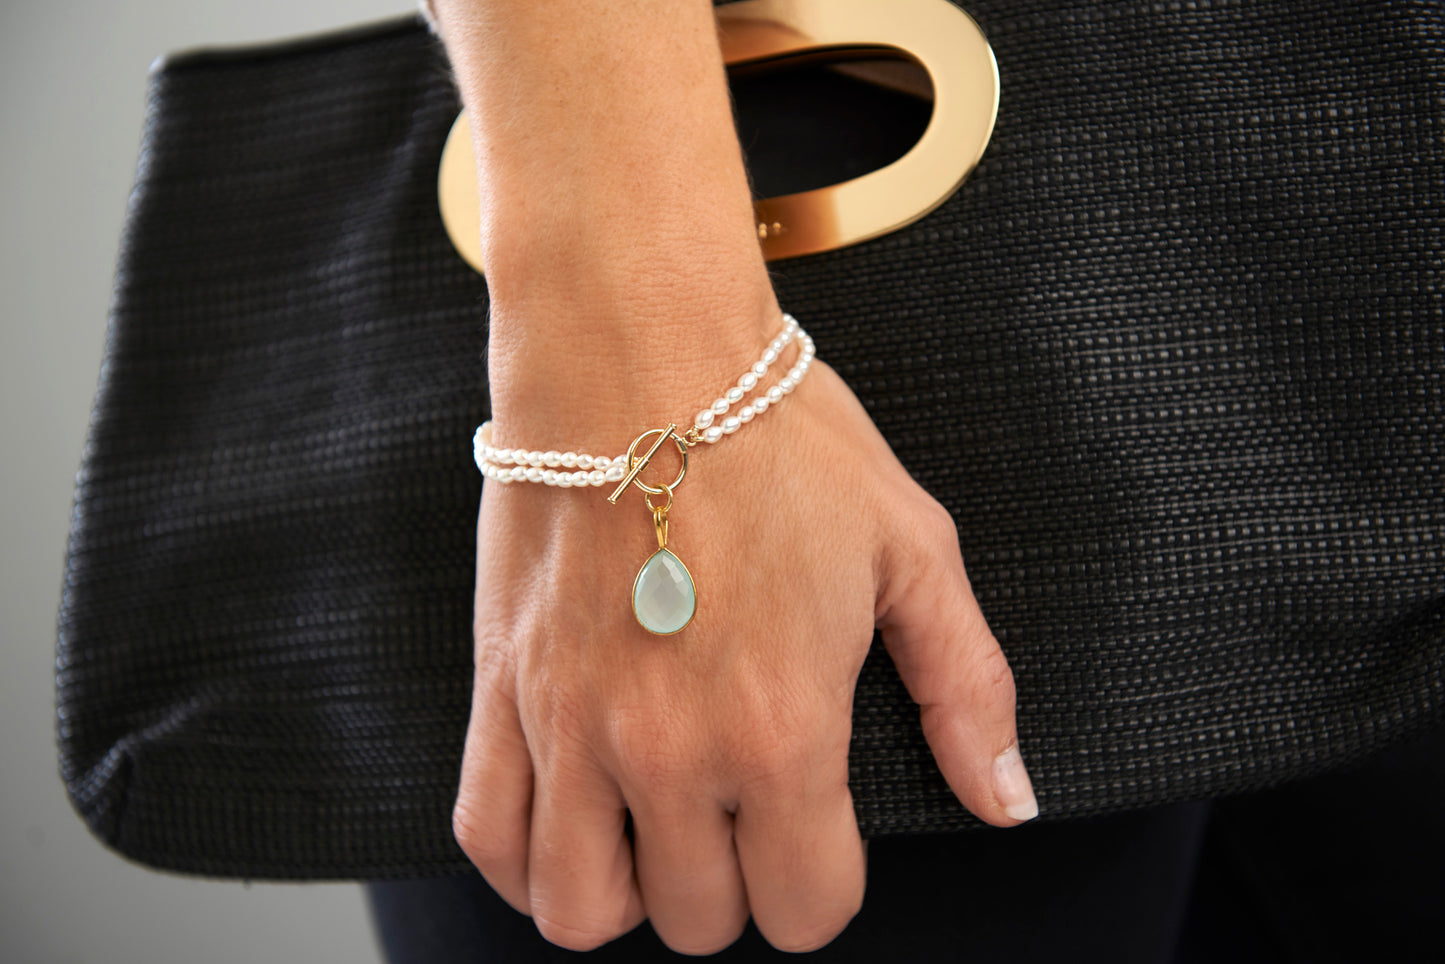 Clara double-strand pearl bracelet with an aqua chalcedony drop pendant